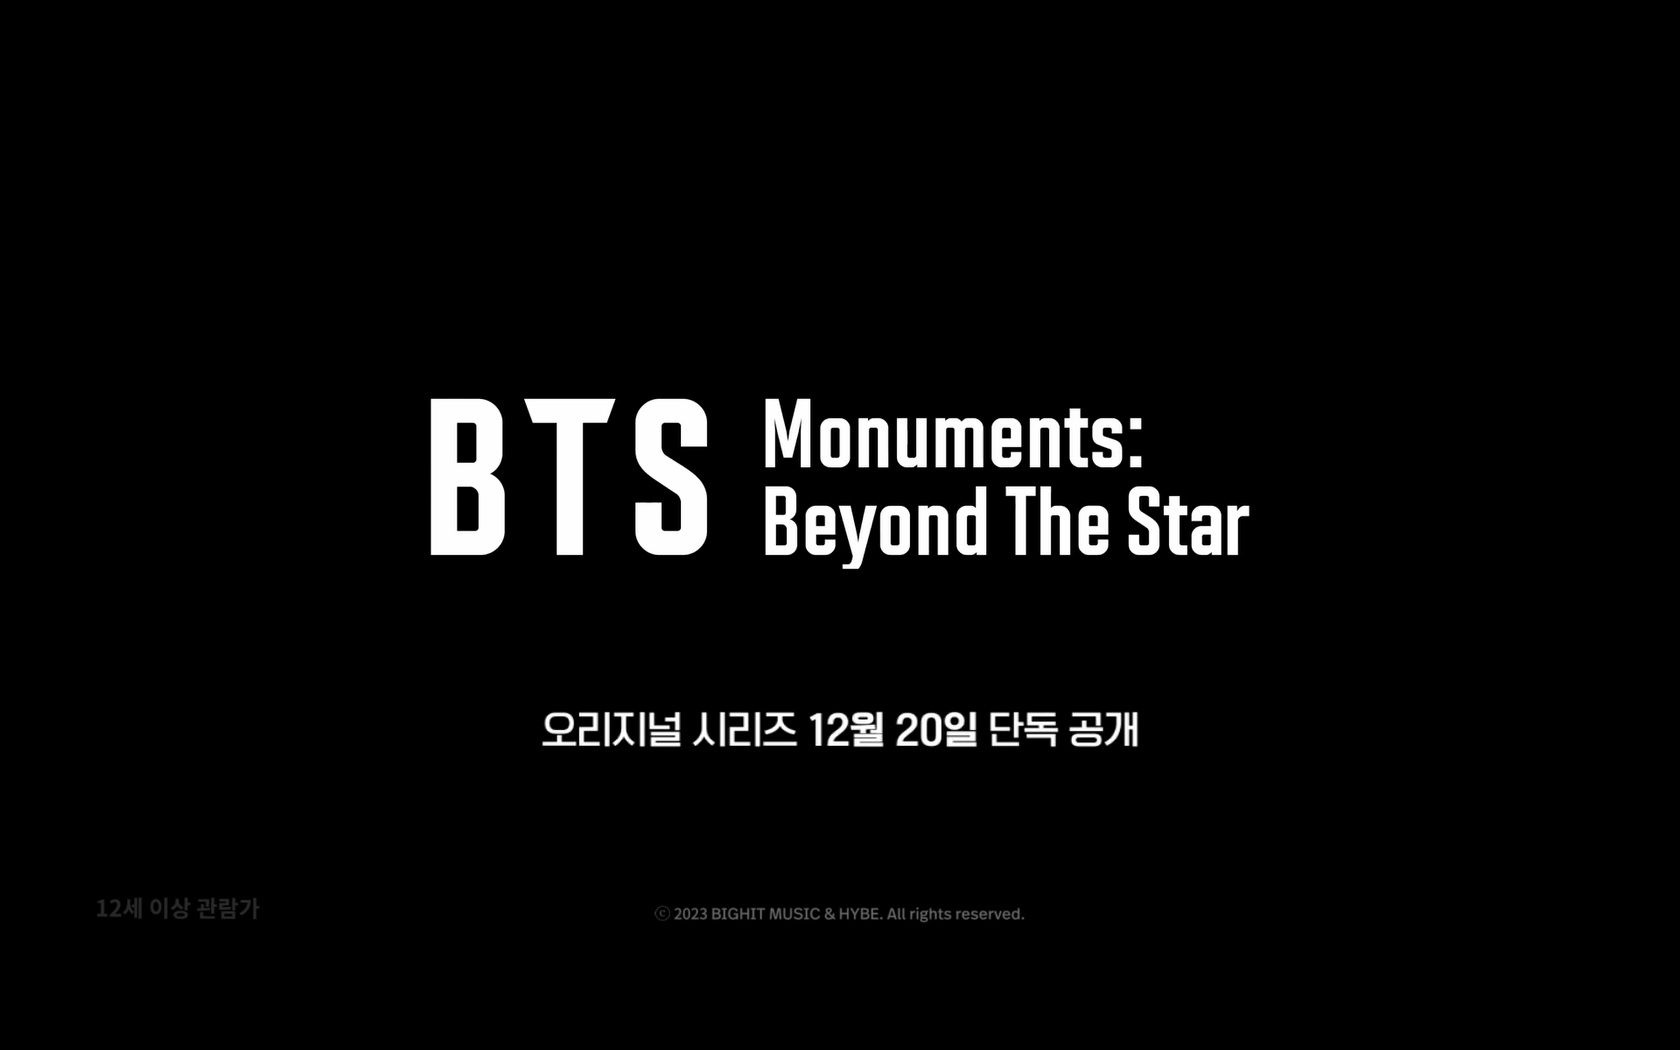 BTS Monuments: Beyond The Star[기타]